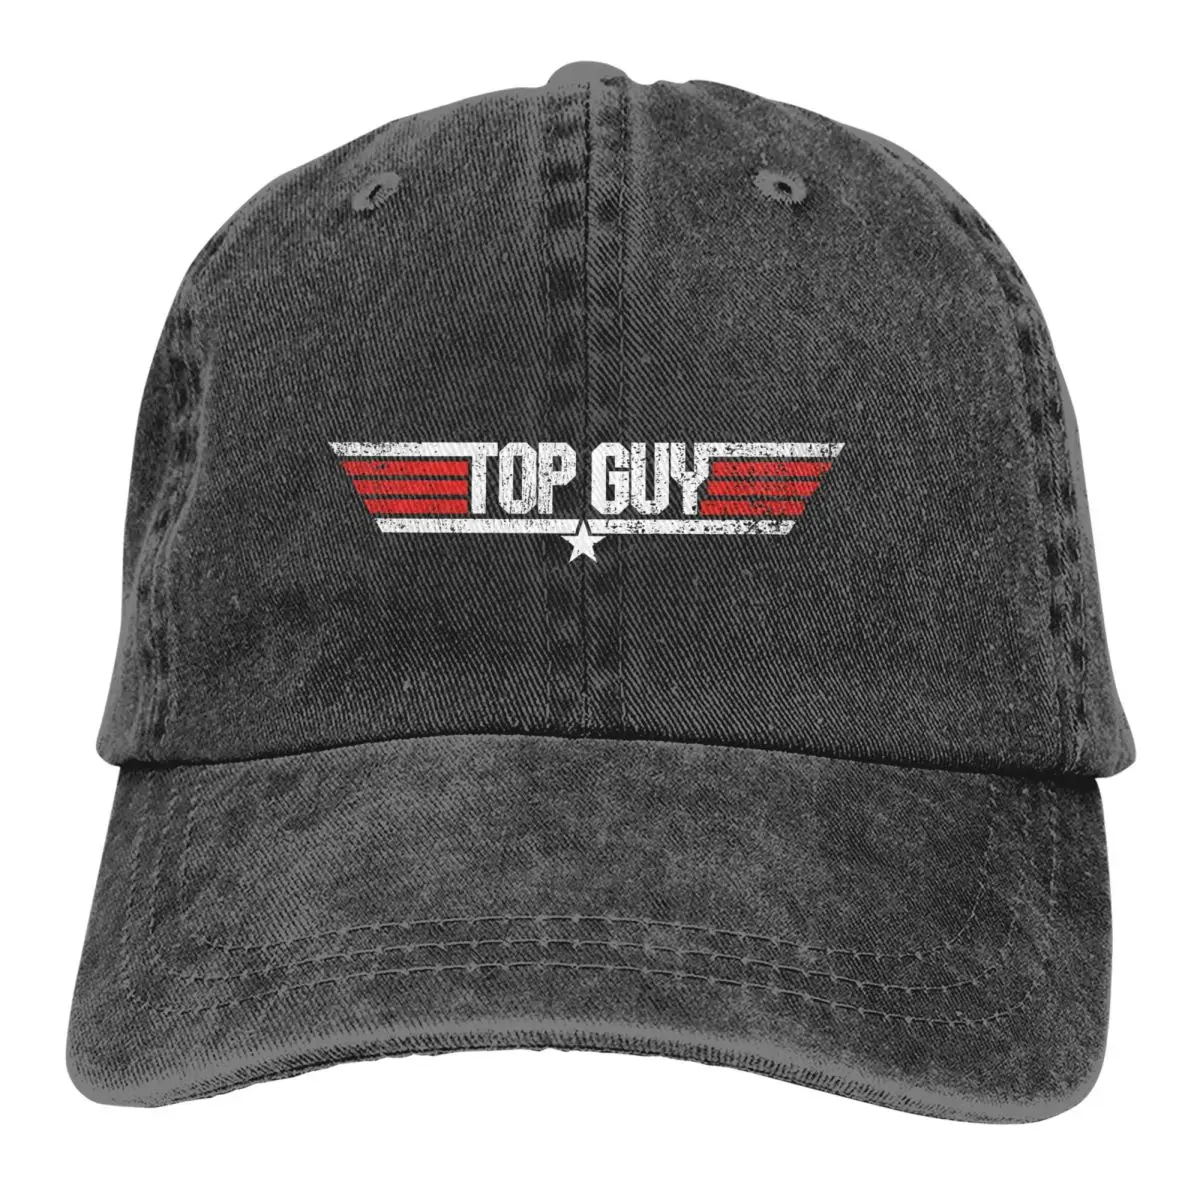 

Summer Cap Sun Visor Top Guy Hip Hop Caps Top Gun Maverick Goose Film Cowboy Hat Peaked Trucker Dad Hats